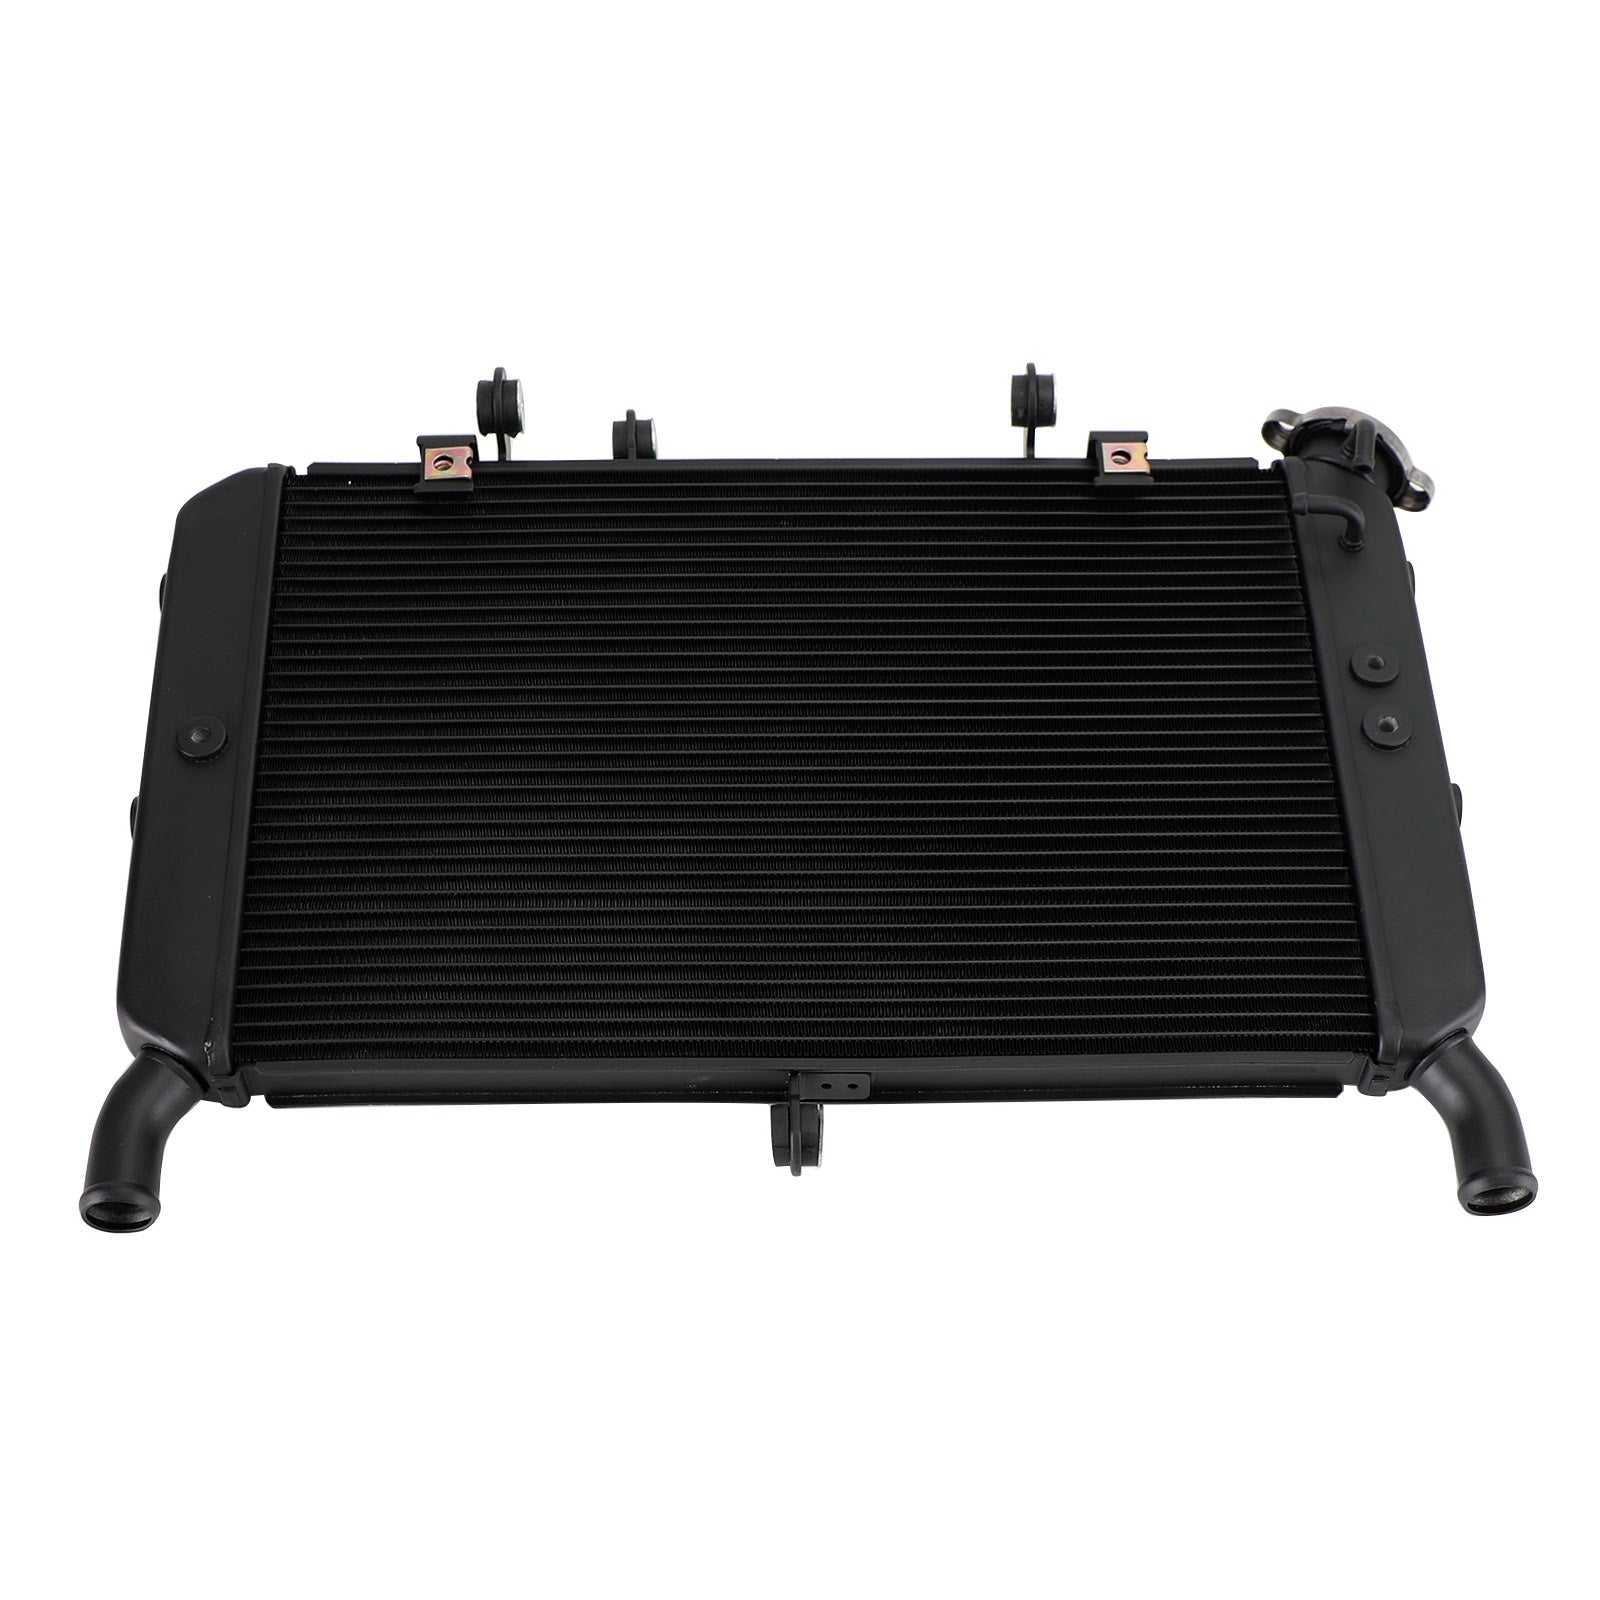 Enfriador de radiador de refrigeración para Yamaha FZ09 MT09 MT-09 2014-20 TRACER 900 19-20